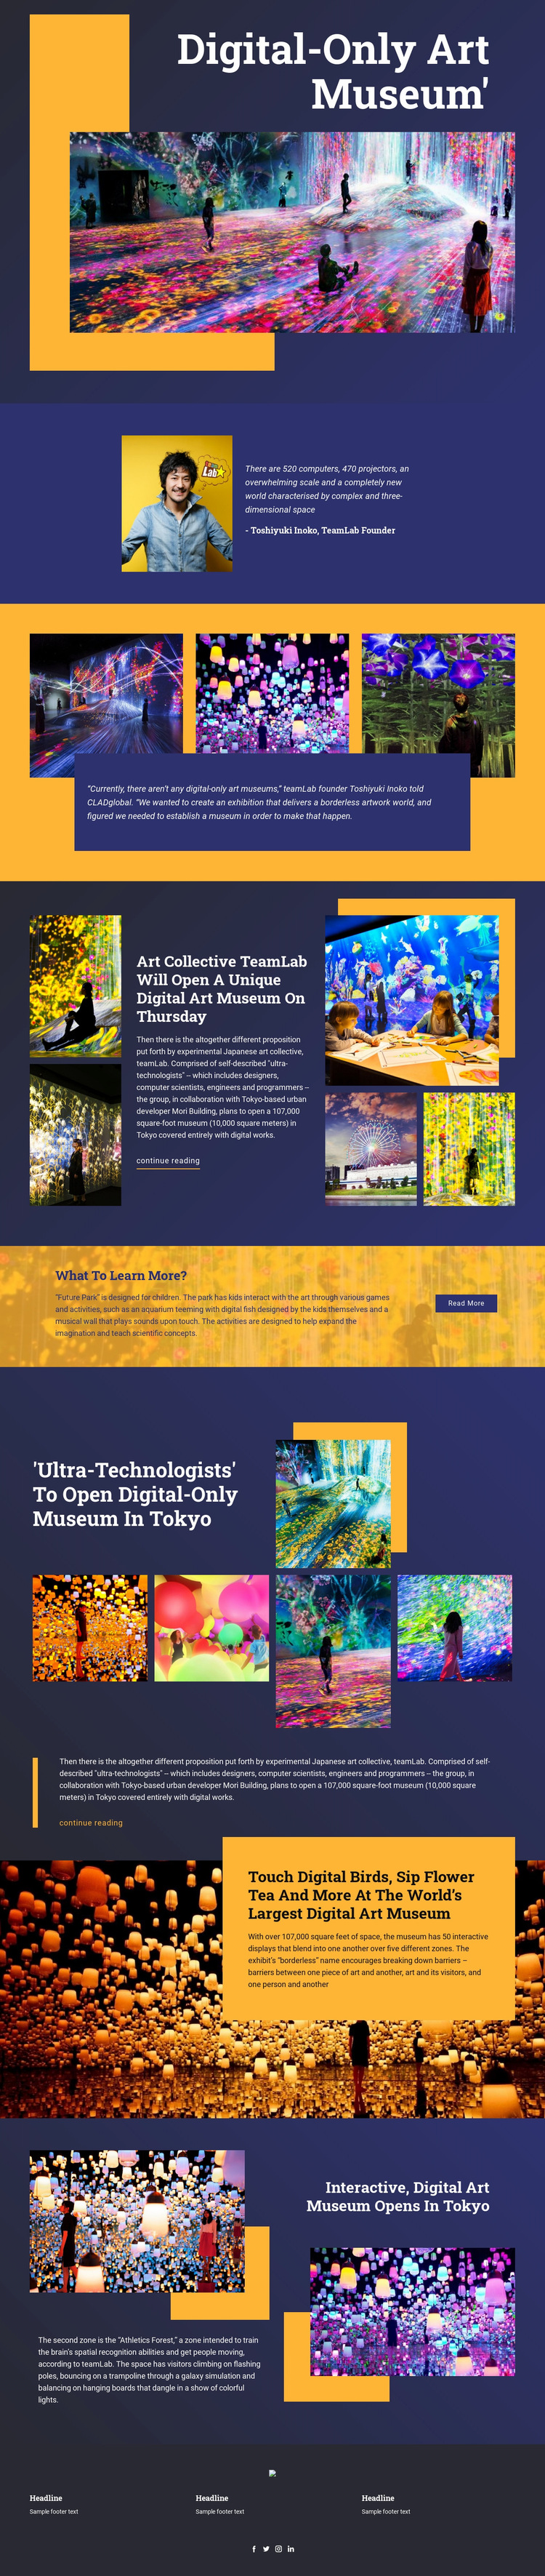 Digital Art Museum Web Page Design